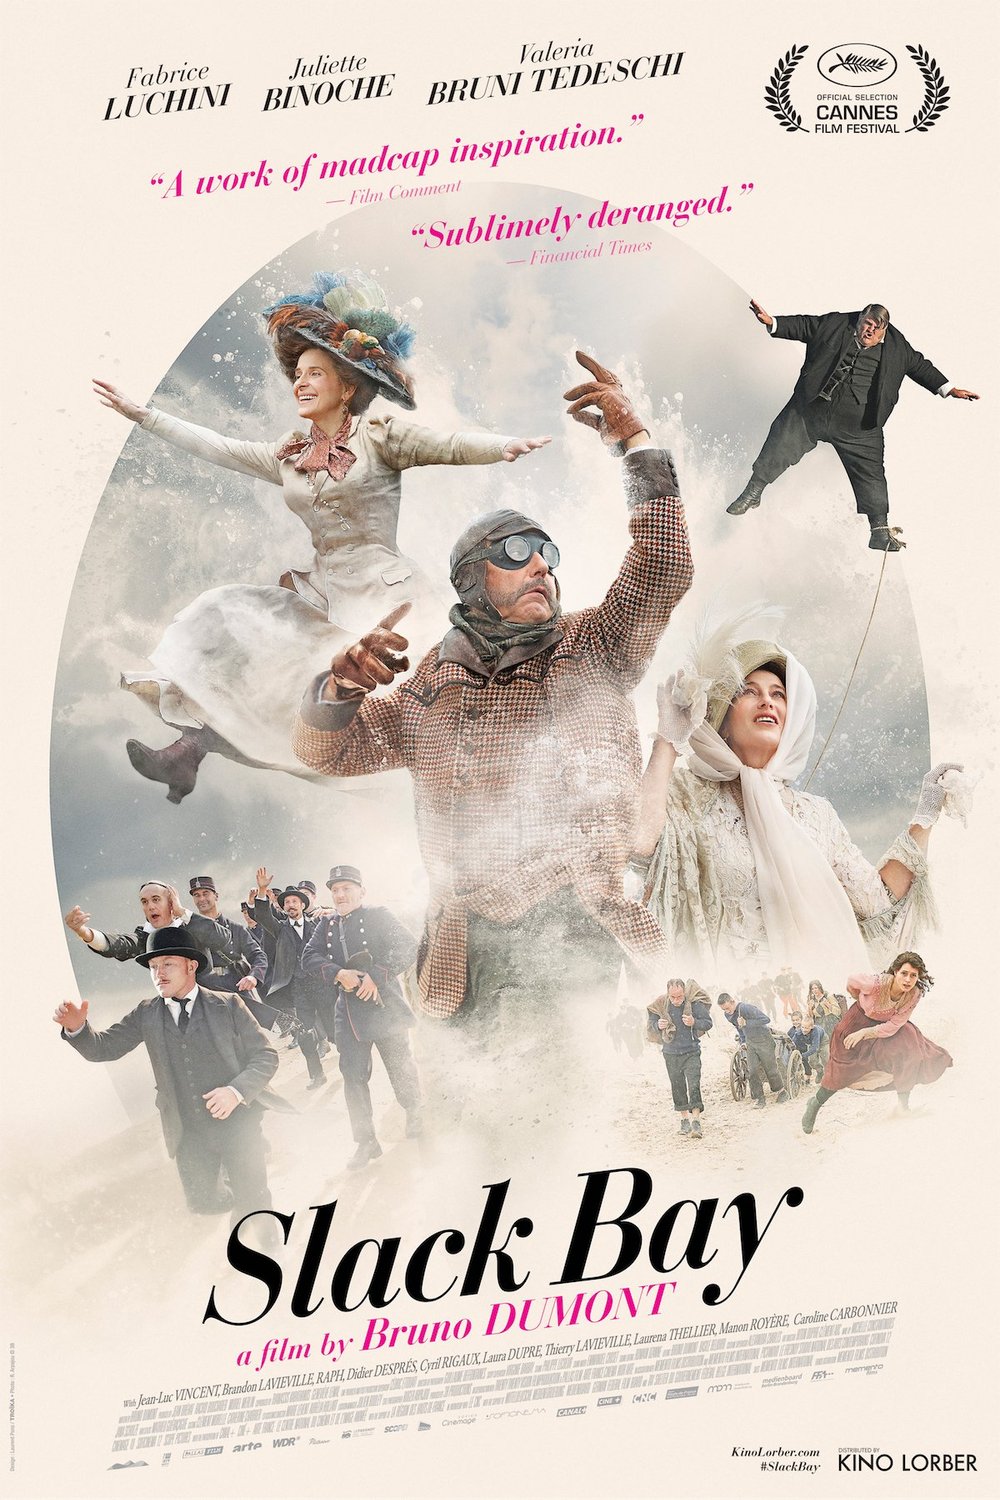 Poster of the movie Slack Bay